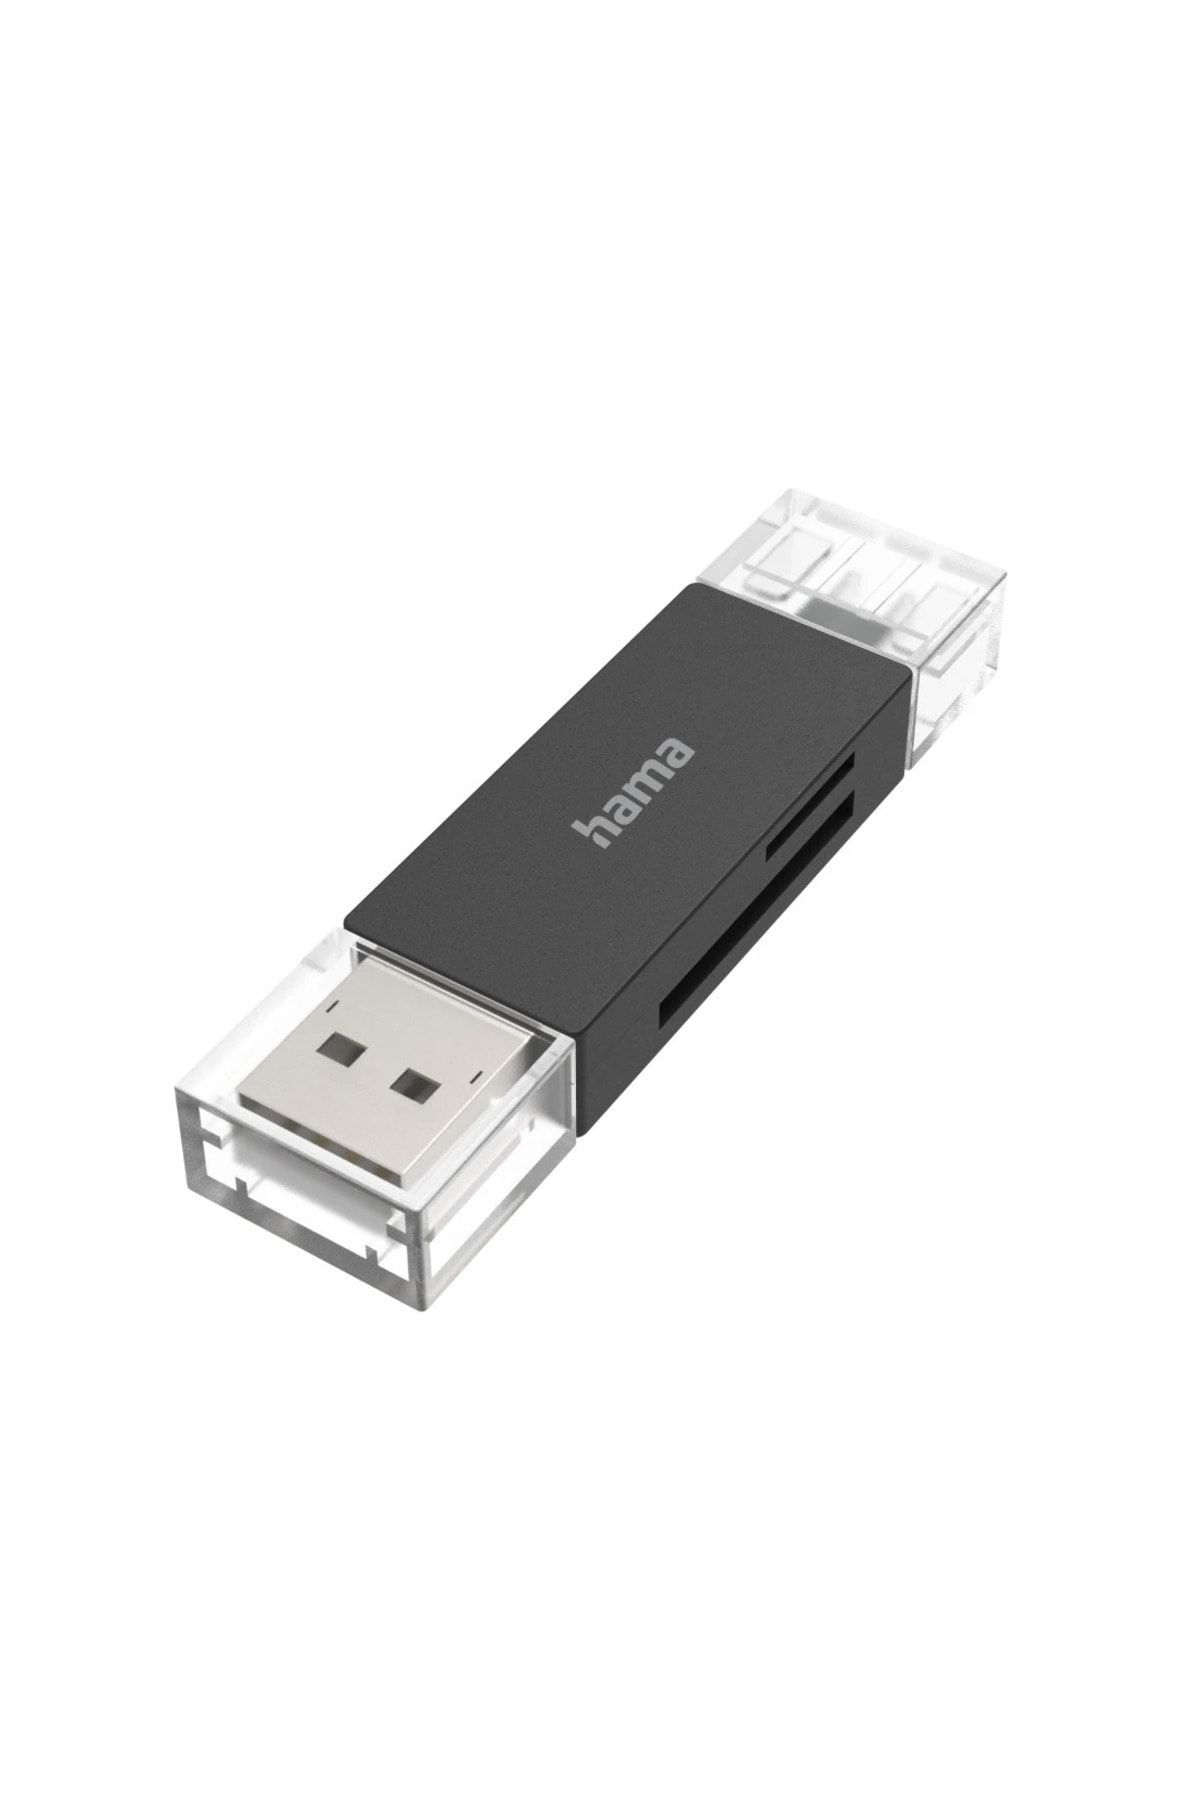 Hama USB Kart Okuyucu, OTG, USB-A + USB-C, USB 3.0, SD/